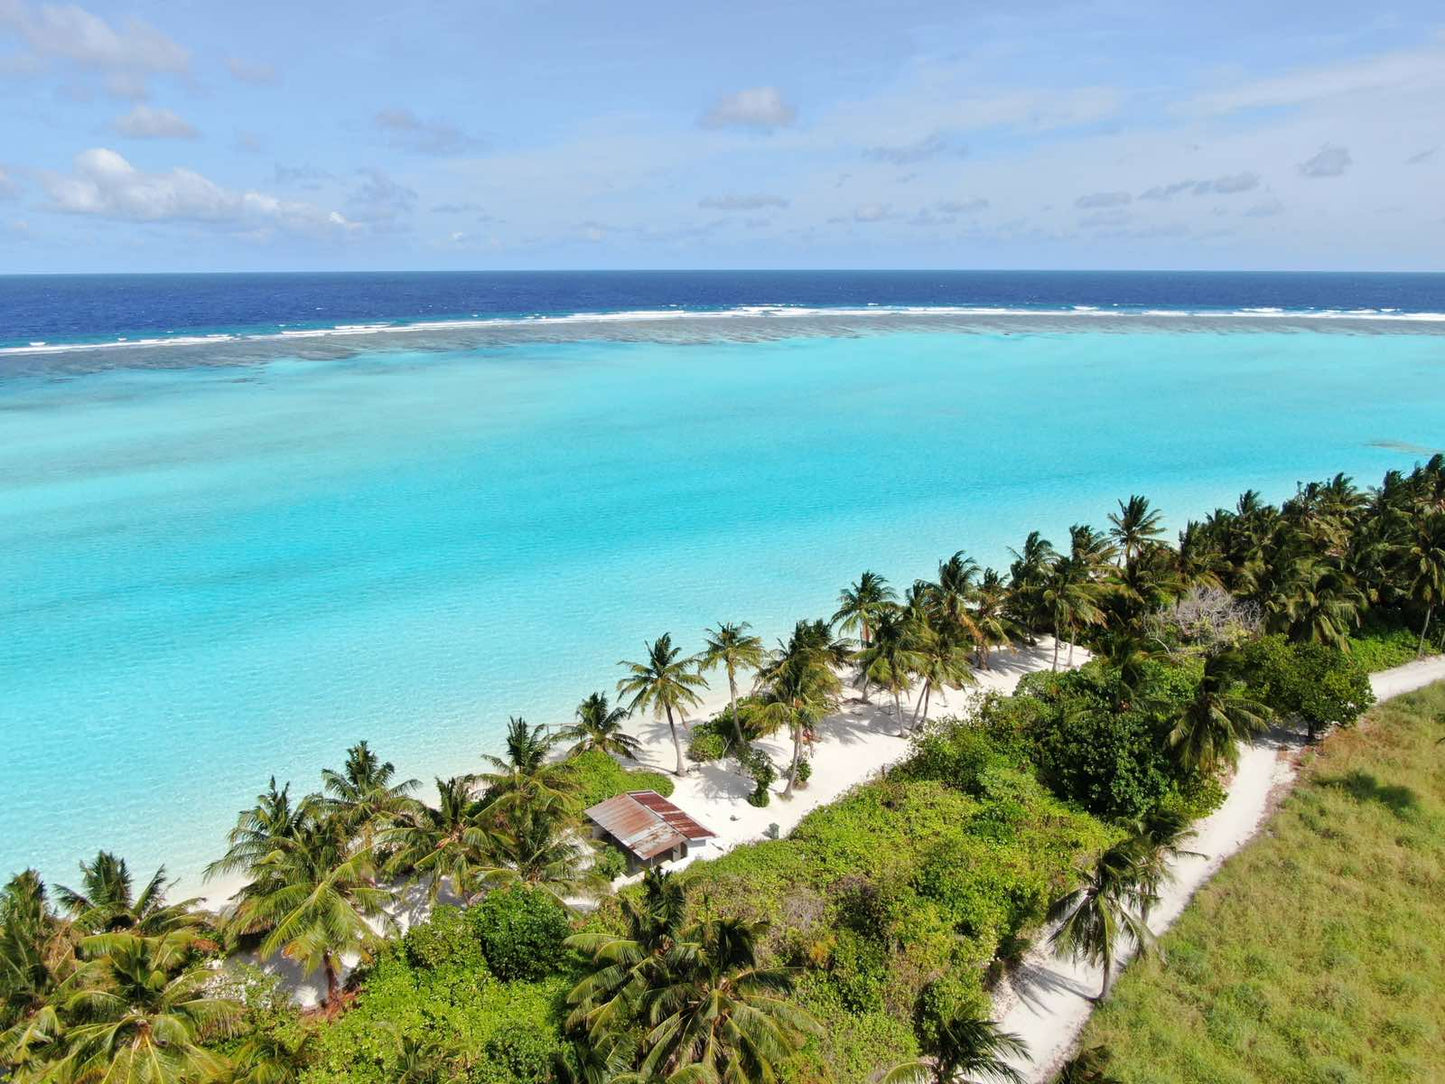 DHONKAMANA STAY - ISLAND VACATION IN THODDOO MALDIVES